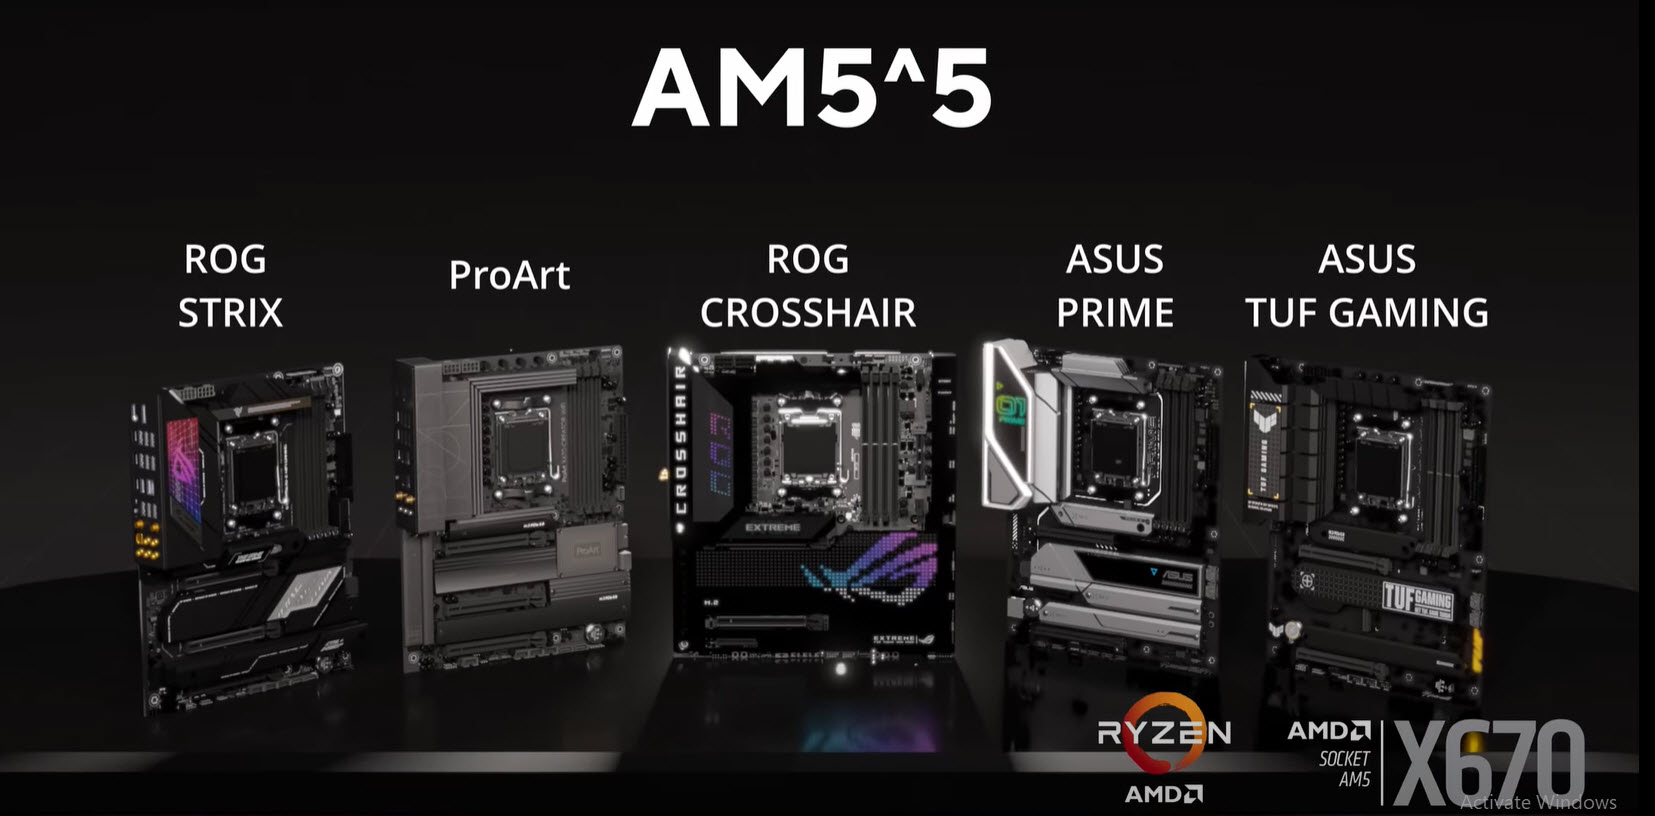 2022 05 26 13 36 10 ASUS Republic of Gamers เปิดตัวเมนบอร์ด ROG Crosshair X670E Extreme มาเธอร์บอร์ดระดับเรือธงสำหรับแพลตฟอร์ม AMD AM5 รุ่นใหม่ มีสล็อต PCI Express 5.0 แบบคู่, การจ่ายพลังงานที่แข็งแกร่ง, รองรับ DDR5, USB4, ASUS Q Design และอื่น ๆ